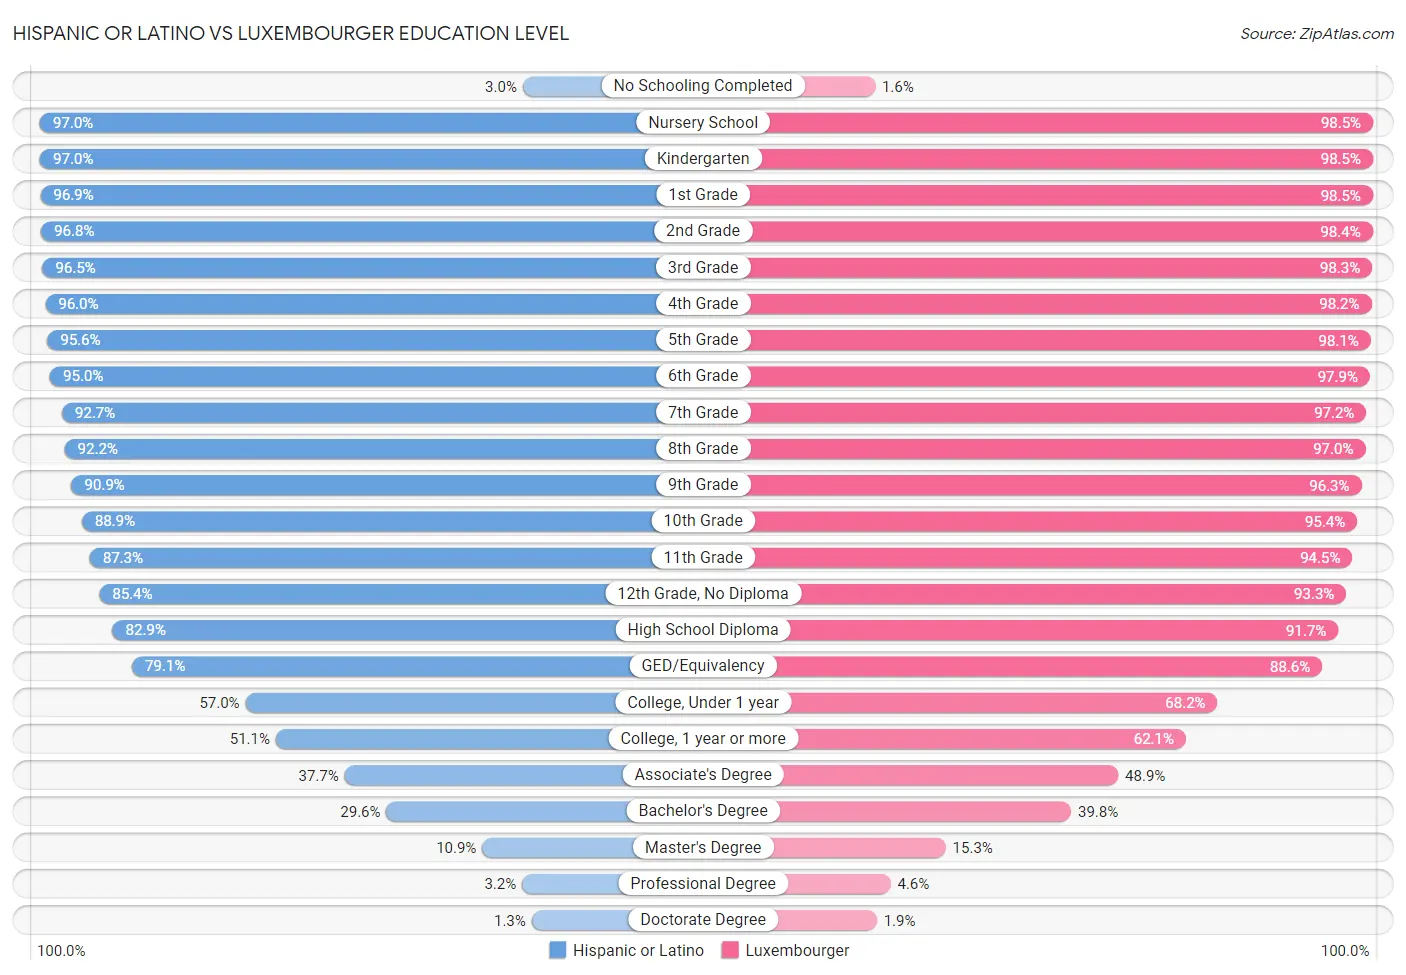 Hispanic or Latino vs Luxembourger Education Level